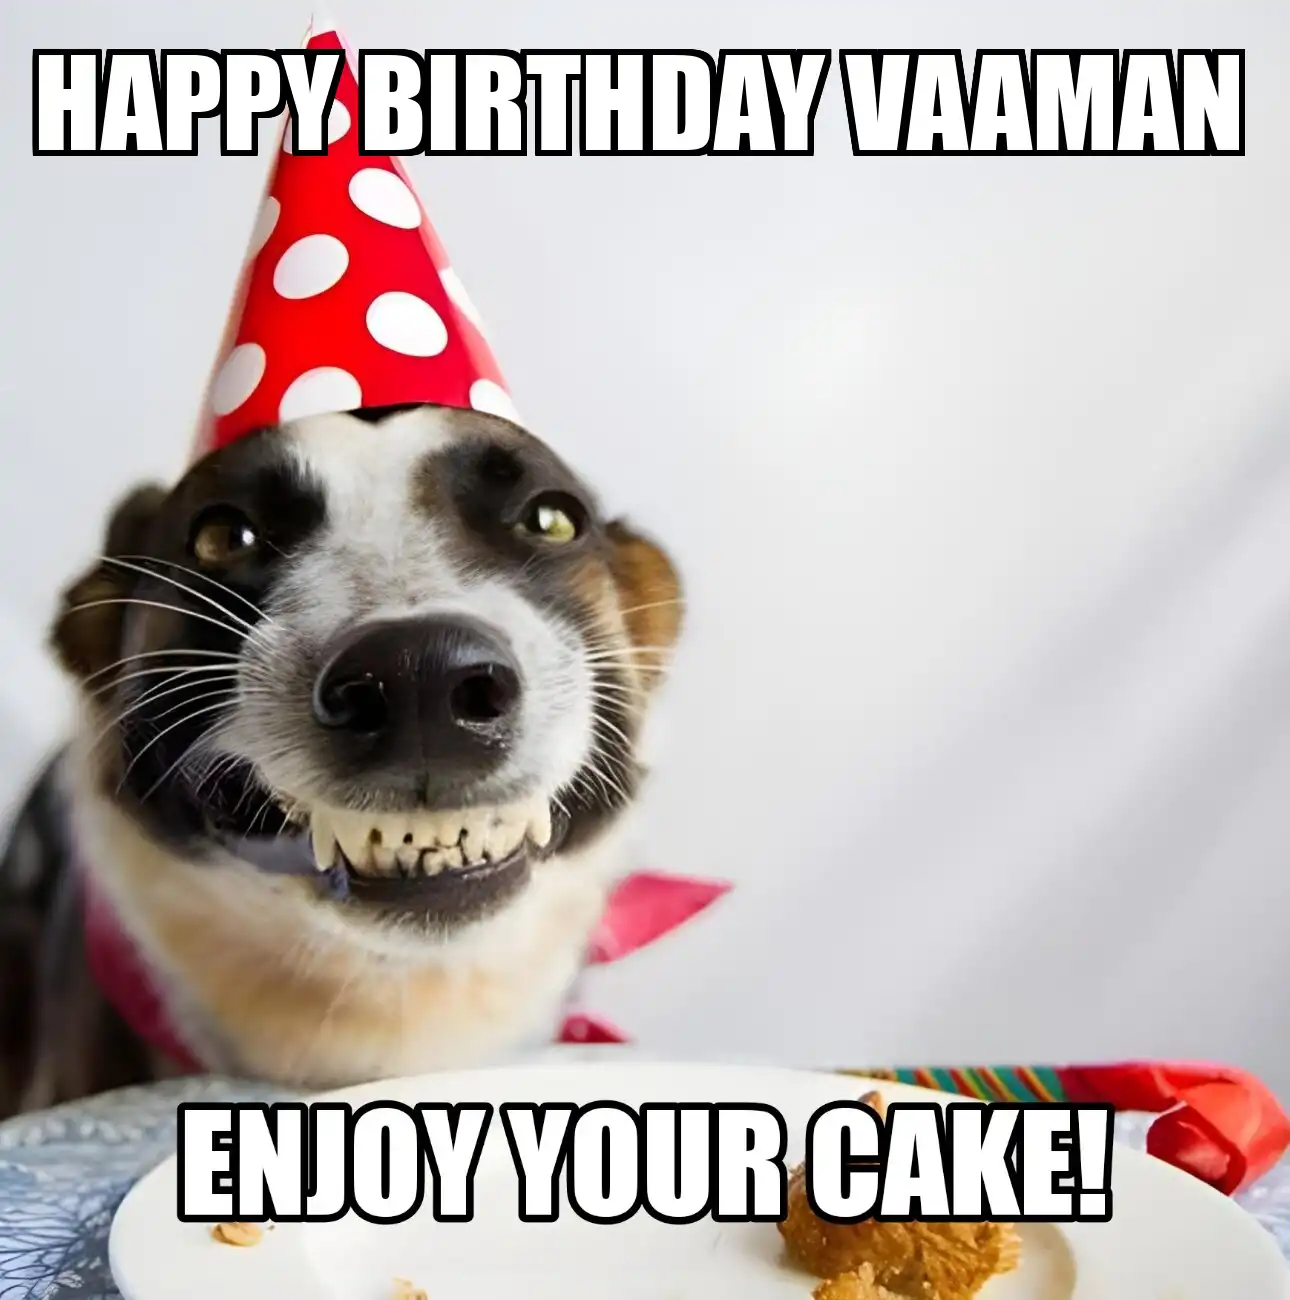 Happy Birthday Vaaman Enjoy Your Cake Dog Meme